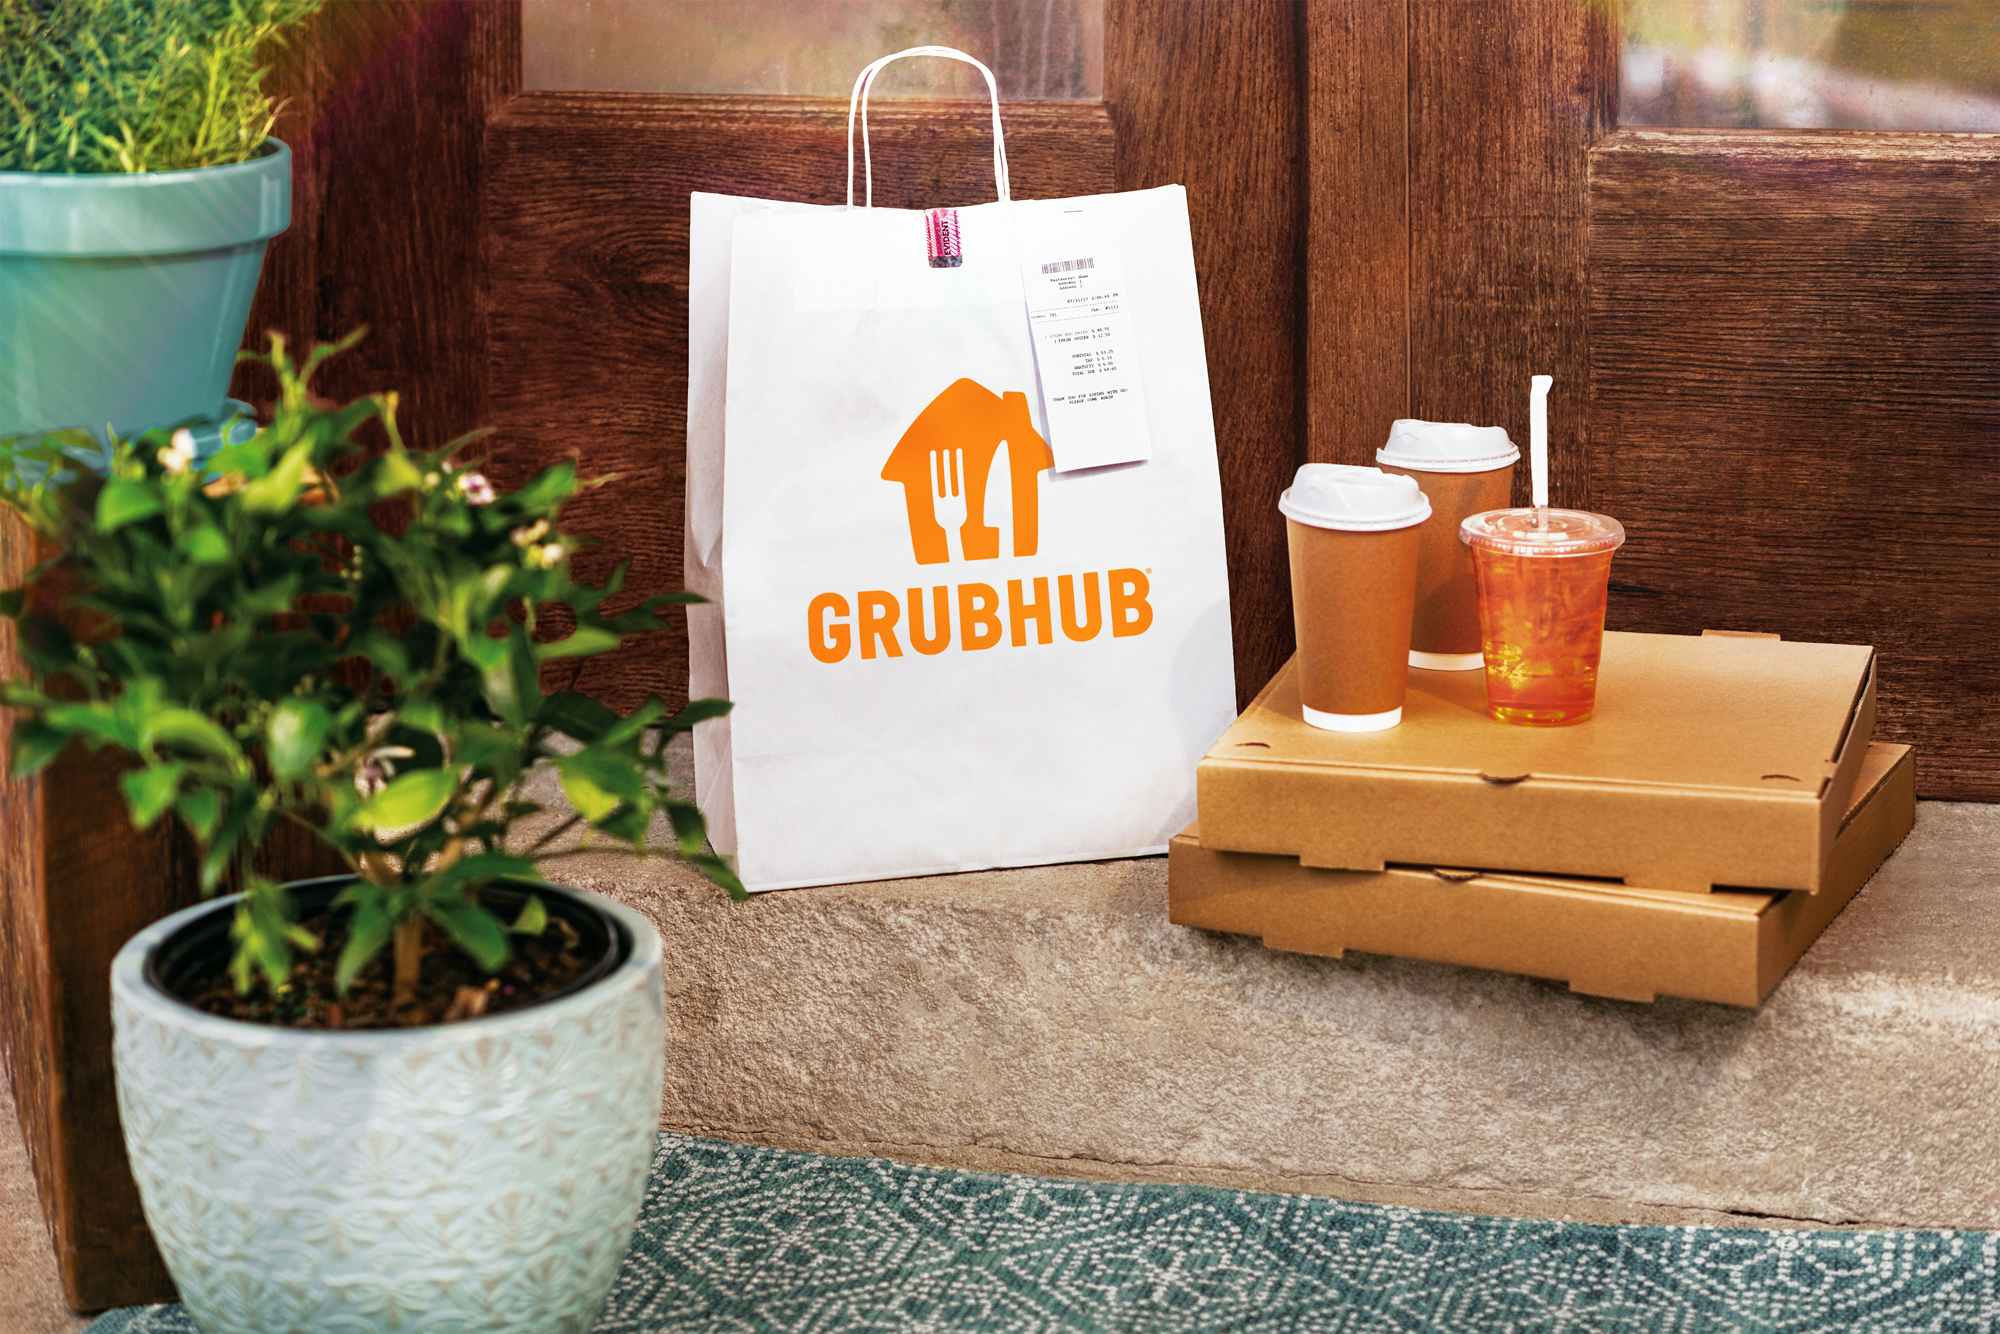 free-grubhub-delivery-amazon-prime